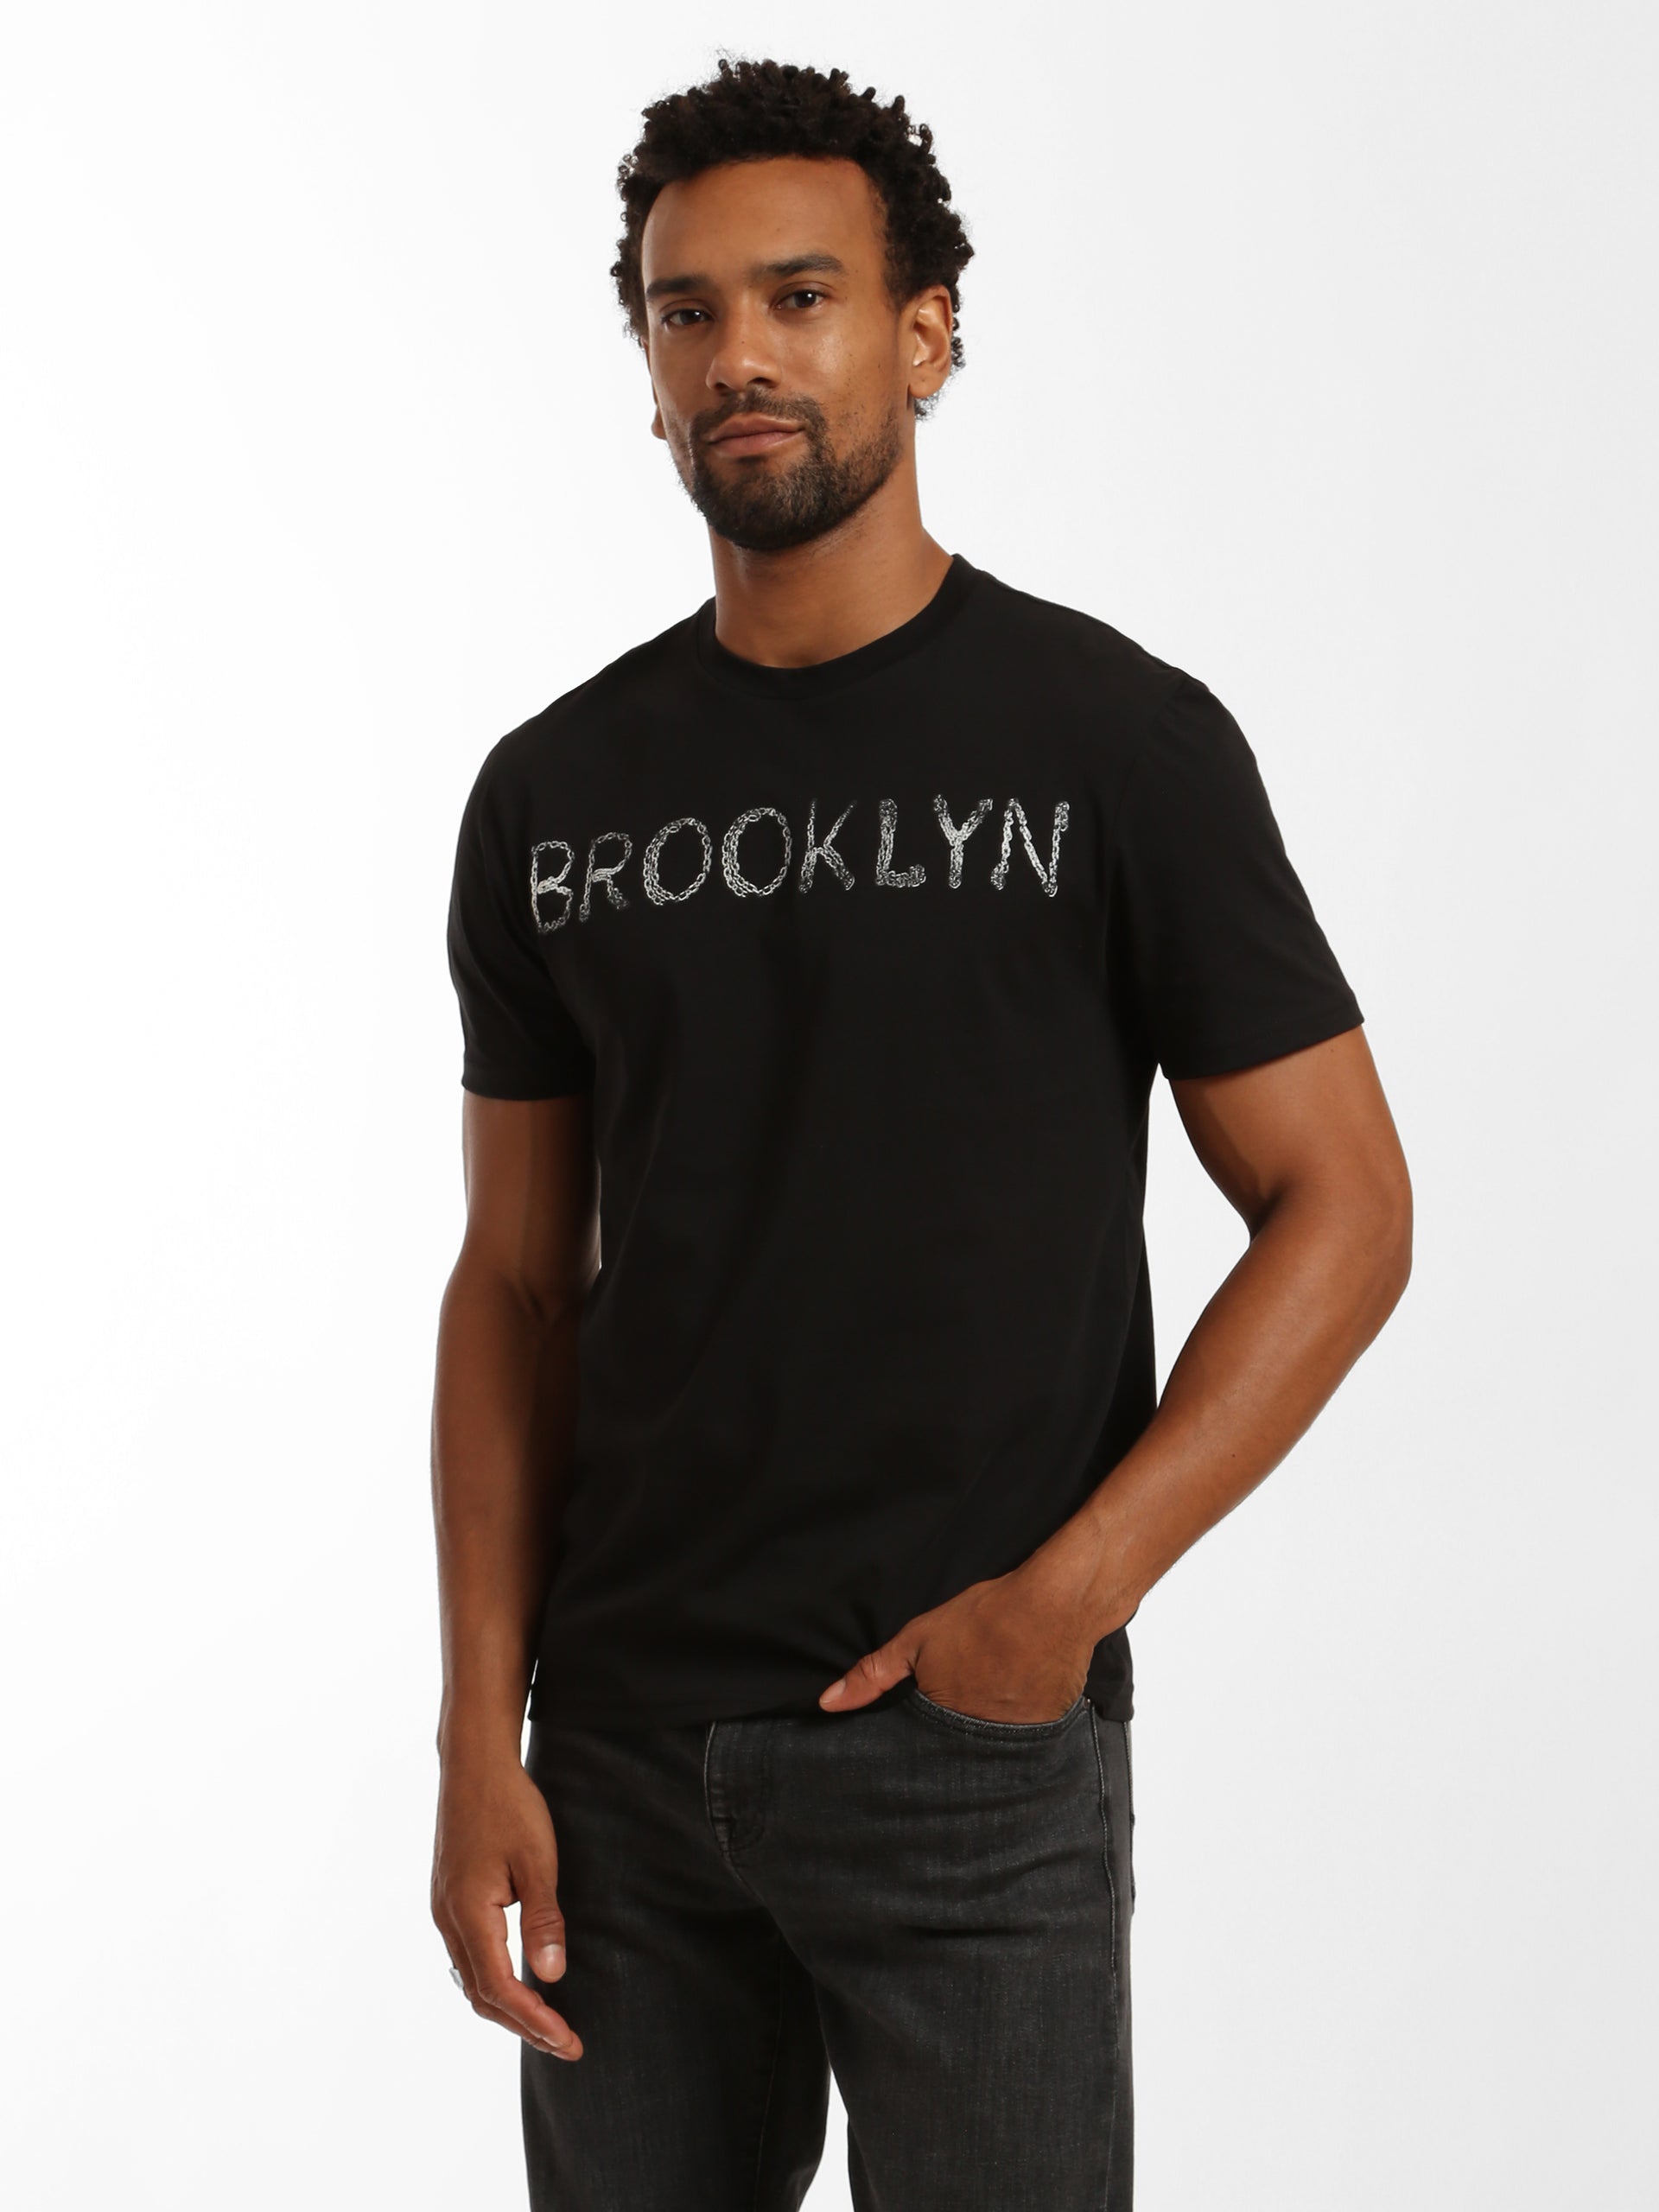 Sale: Up To 50% Off Graphic Tees, Sweatshirts – Brooklyn Industries